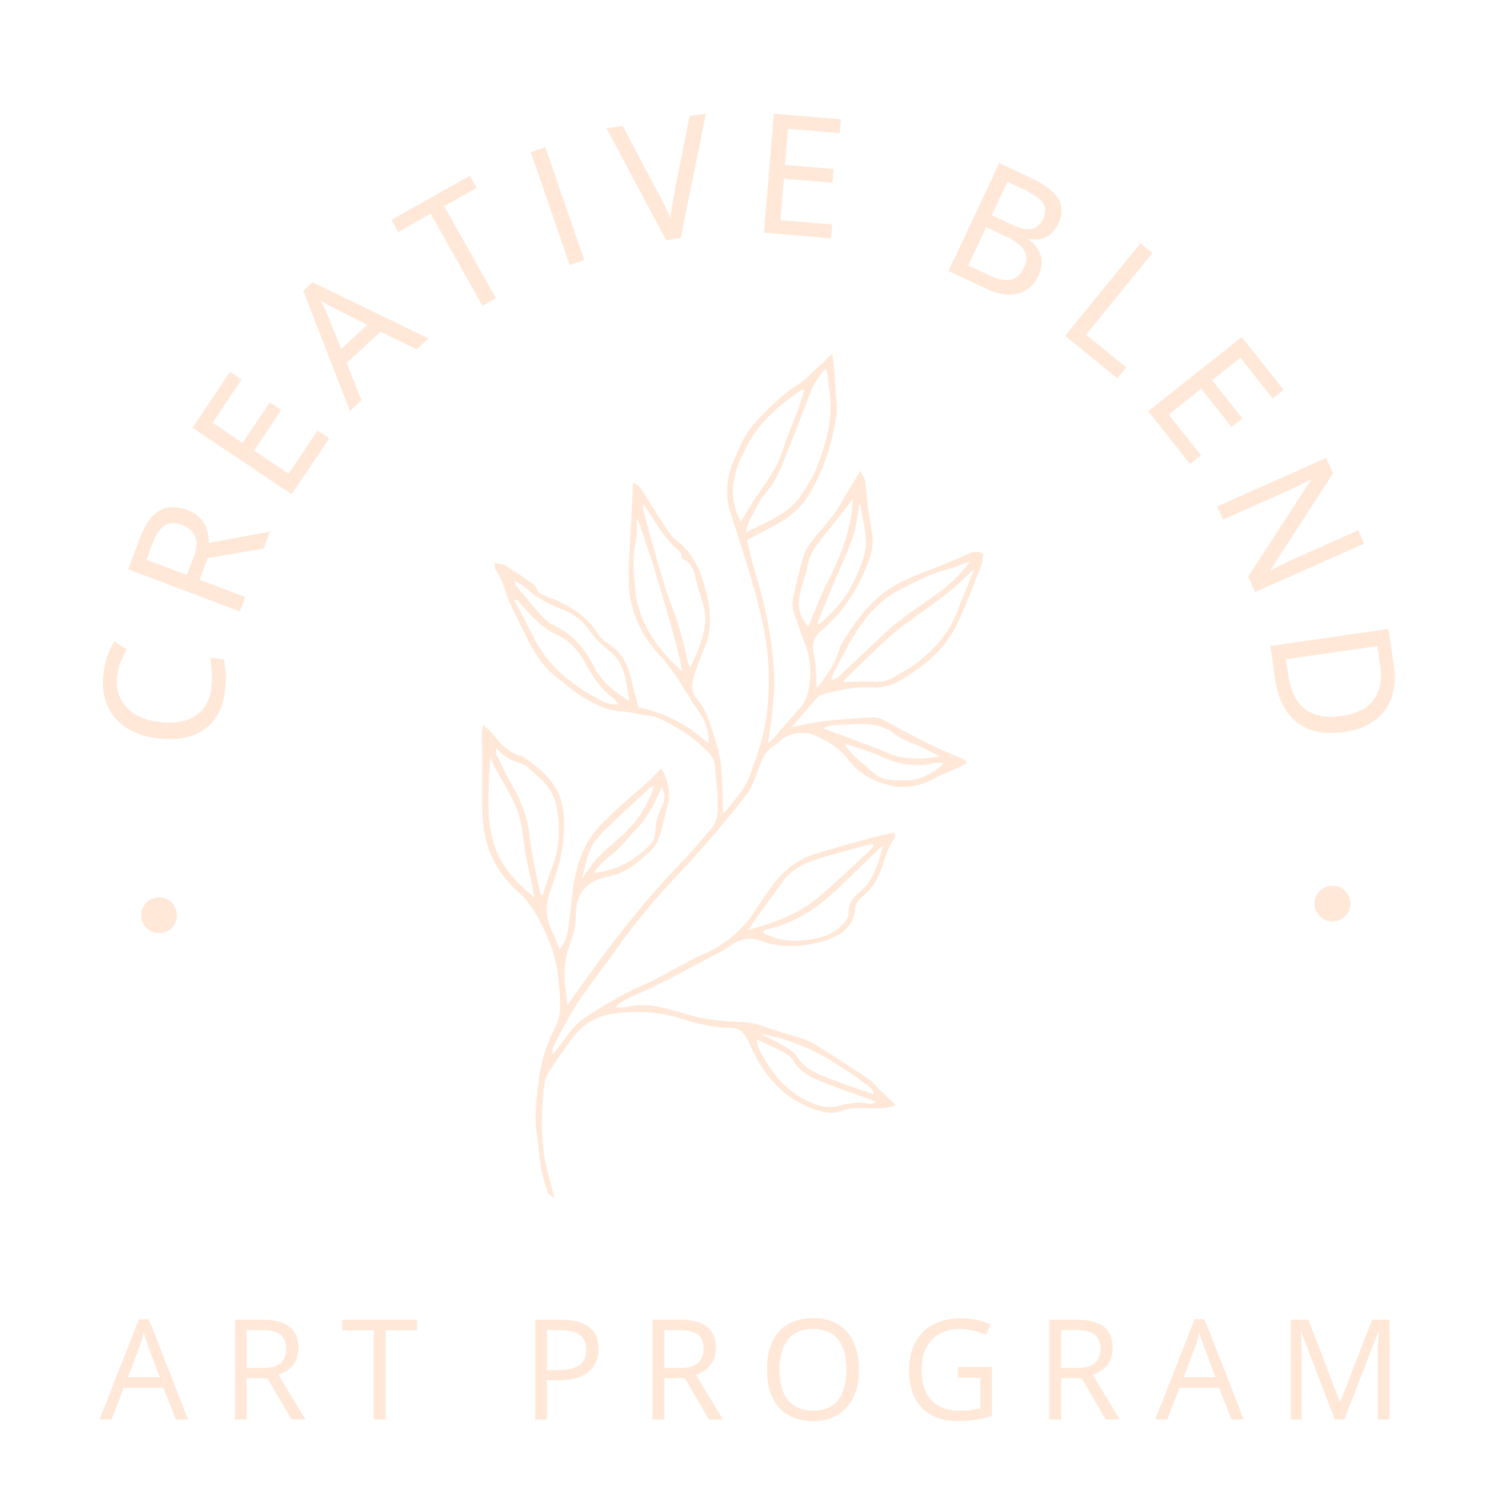 Creative Blend Art Program